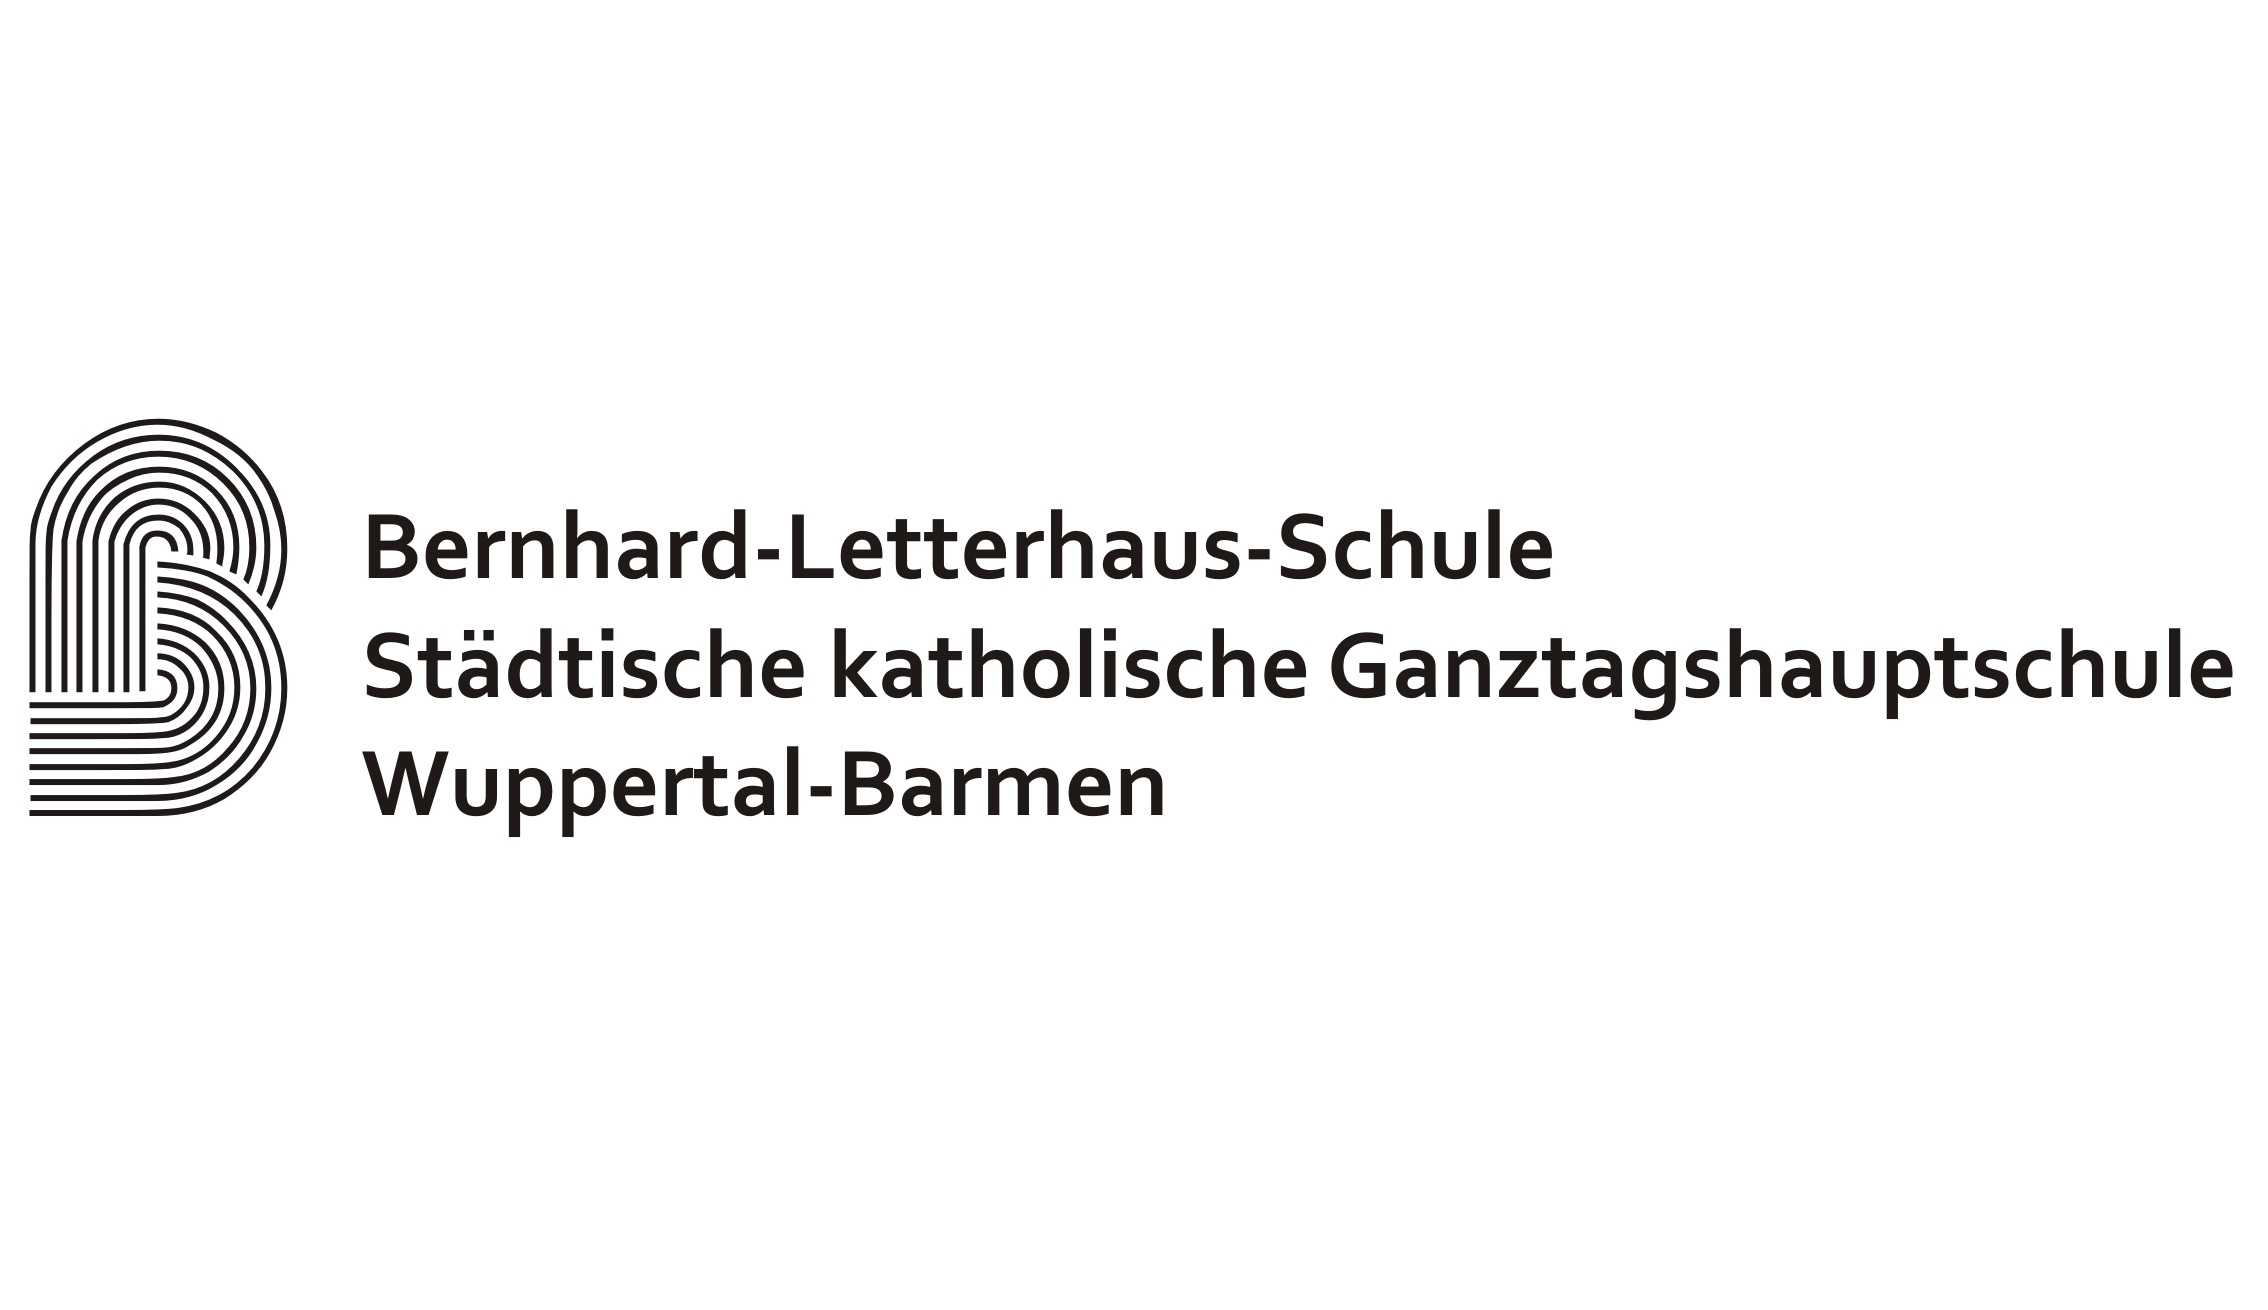 Bernhard-Letterhaus-Schule